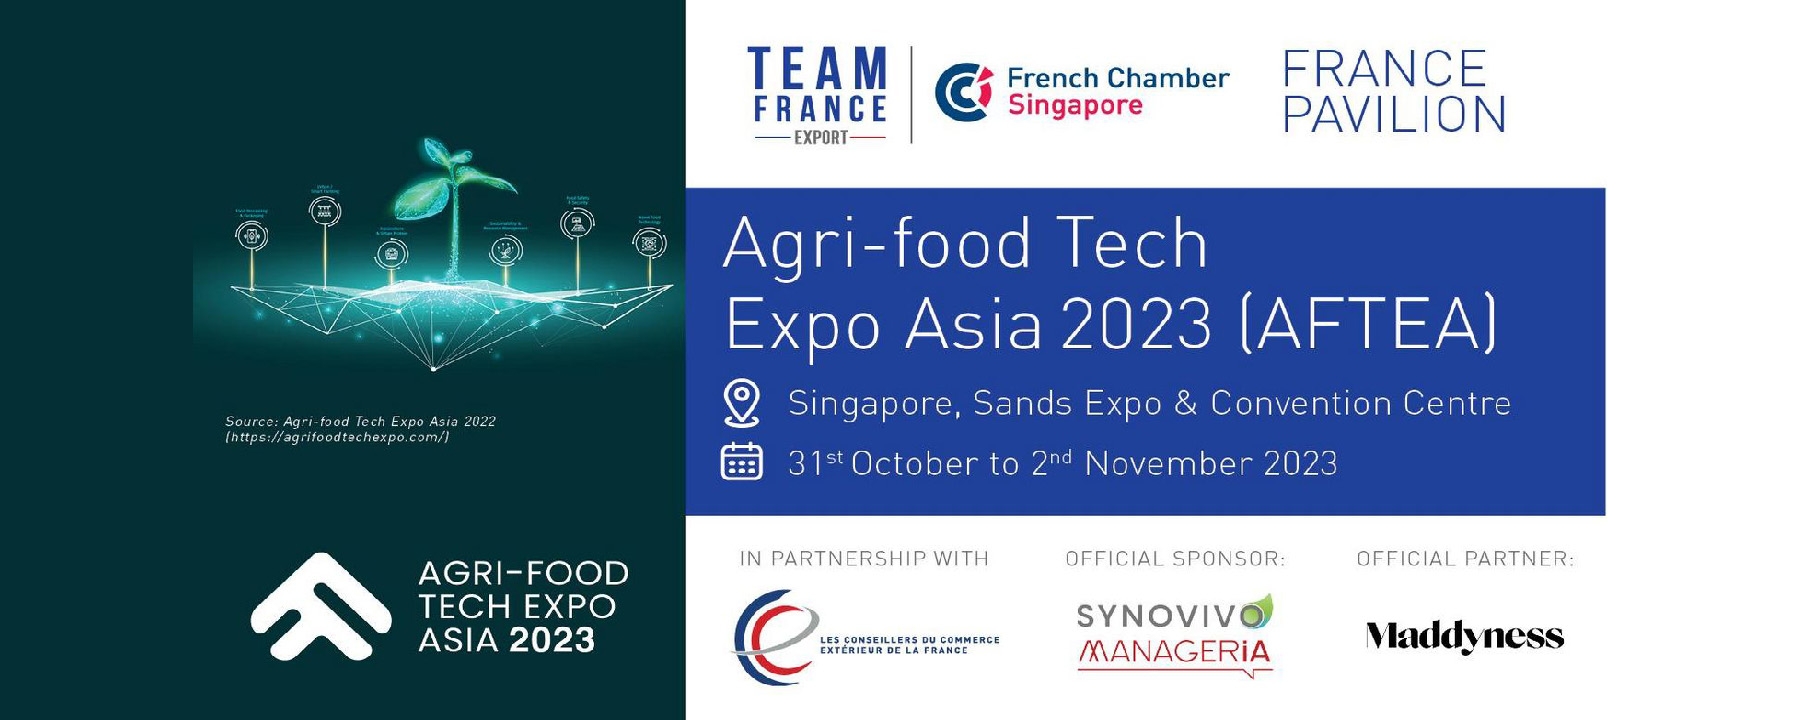 Agri-food Tech Expo Asia (AFTEA) 